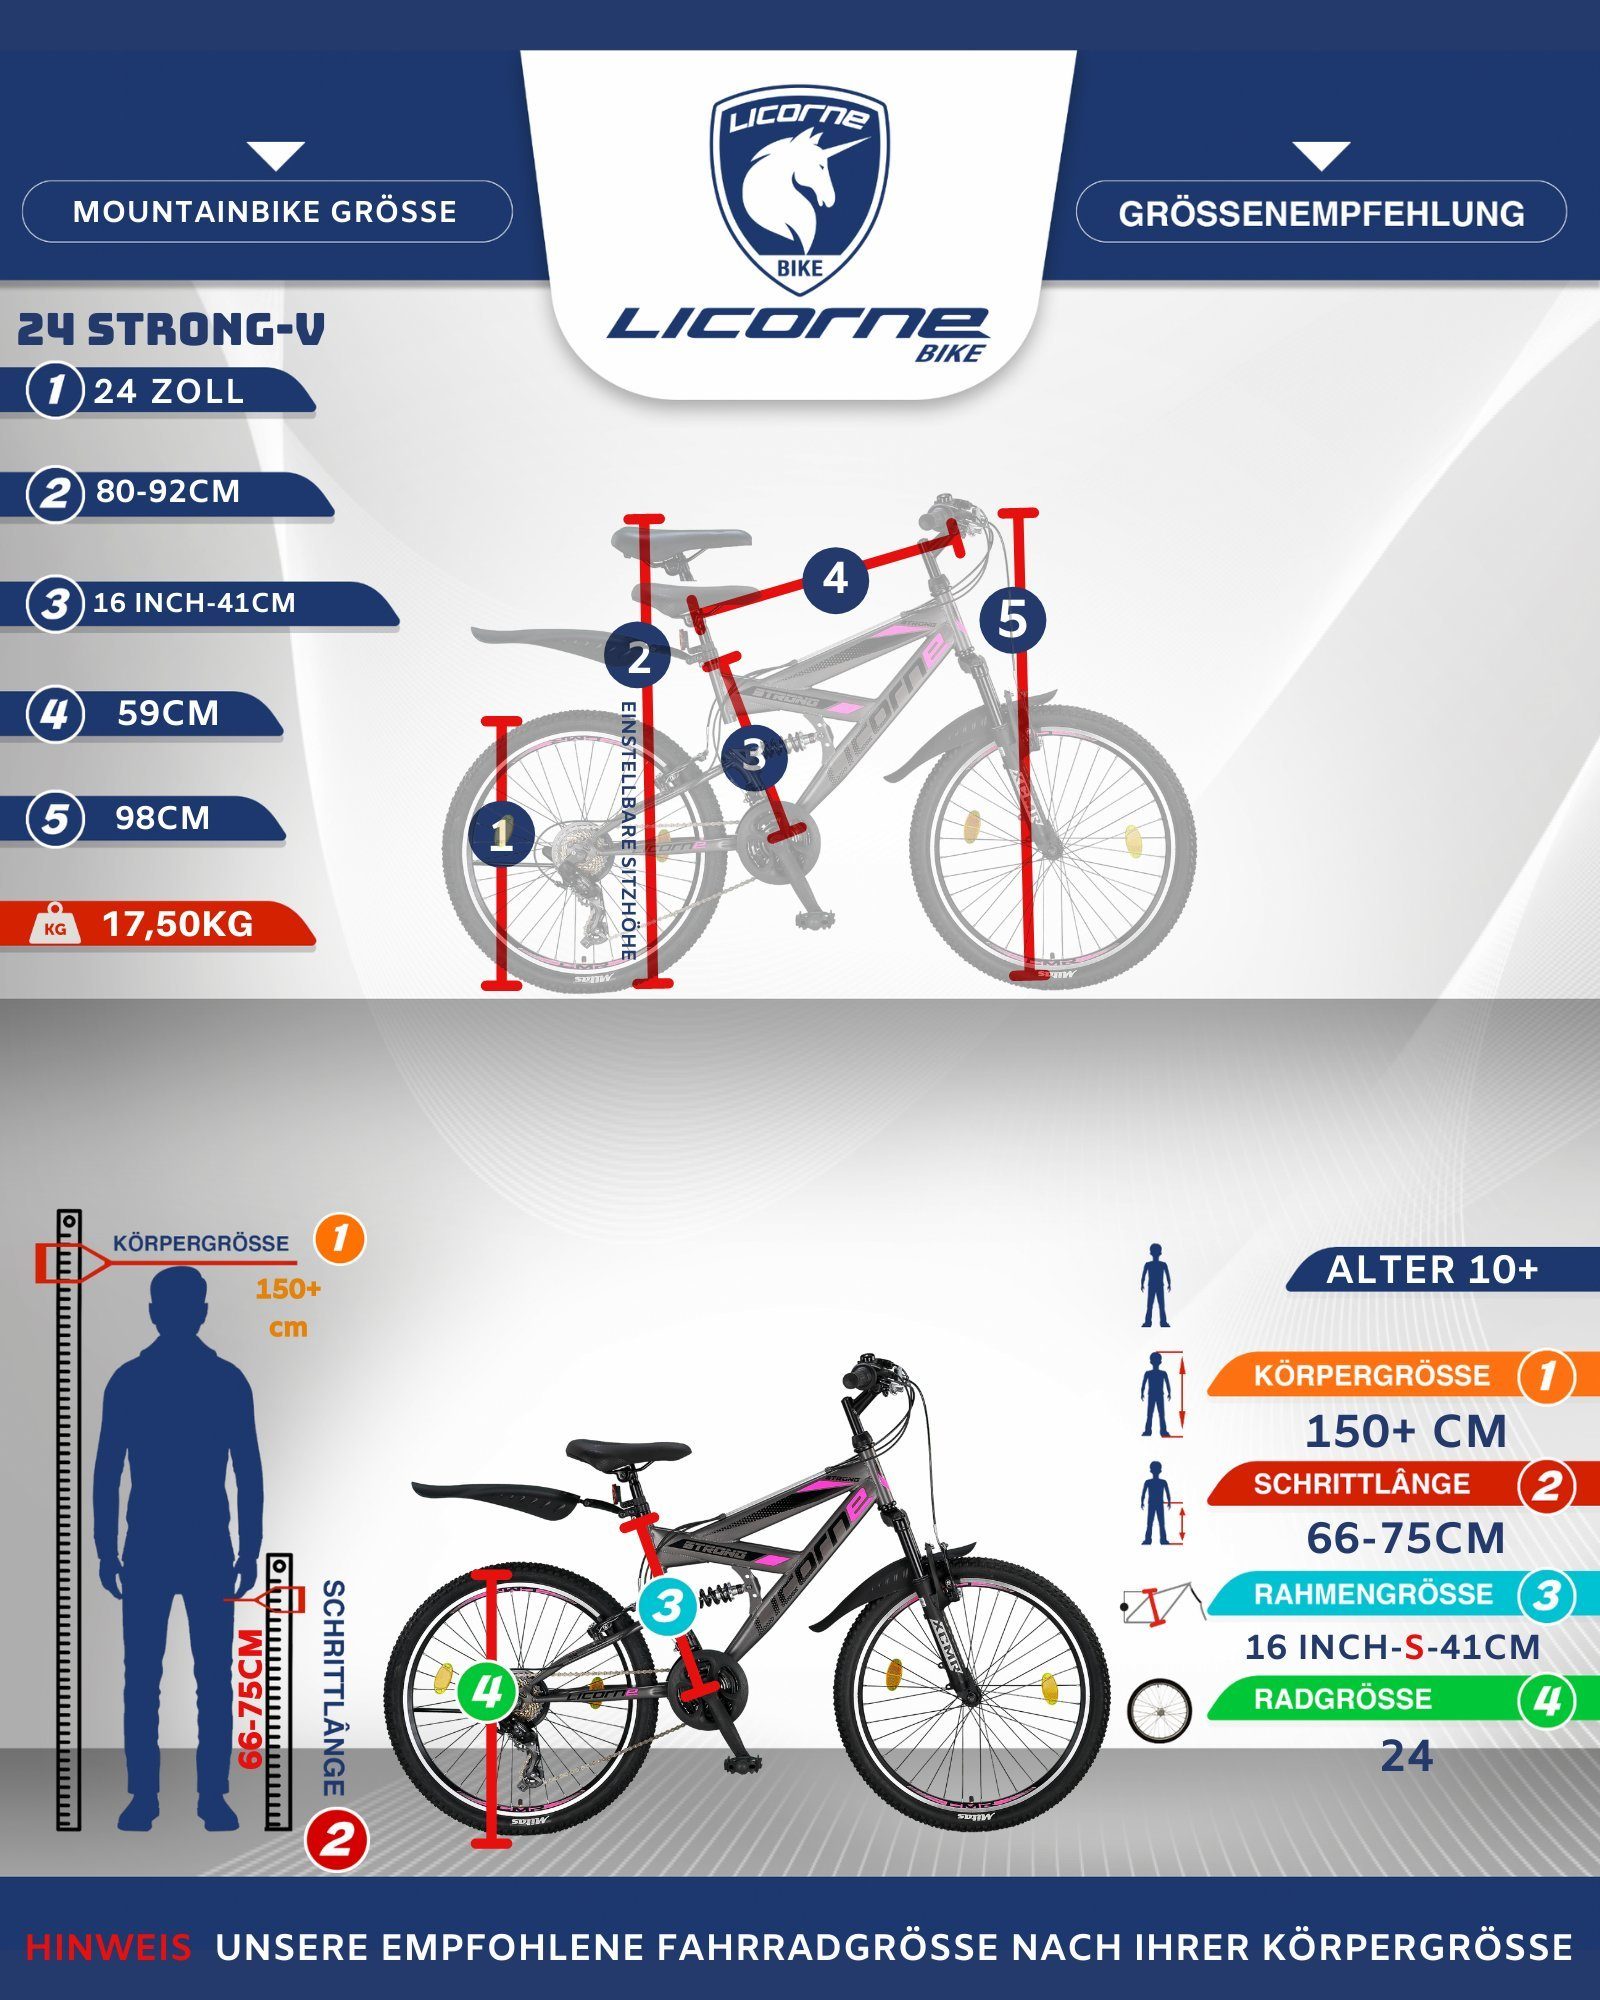 Premium und Mountainbike 21 Licorne Bike Zoll, in 24 V Schwarz/Blau/Orange 26 Mountainbike Strong Gang Bike Licorne